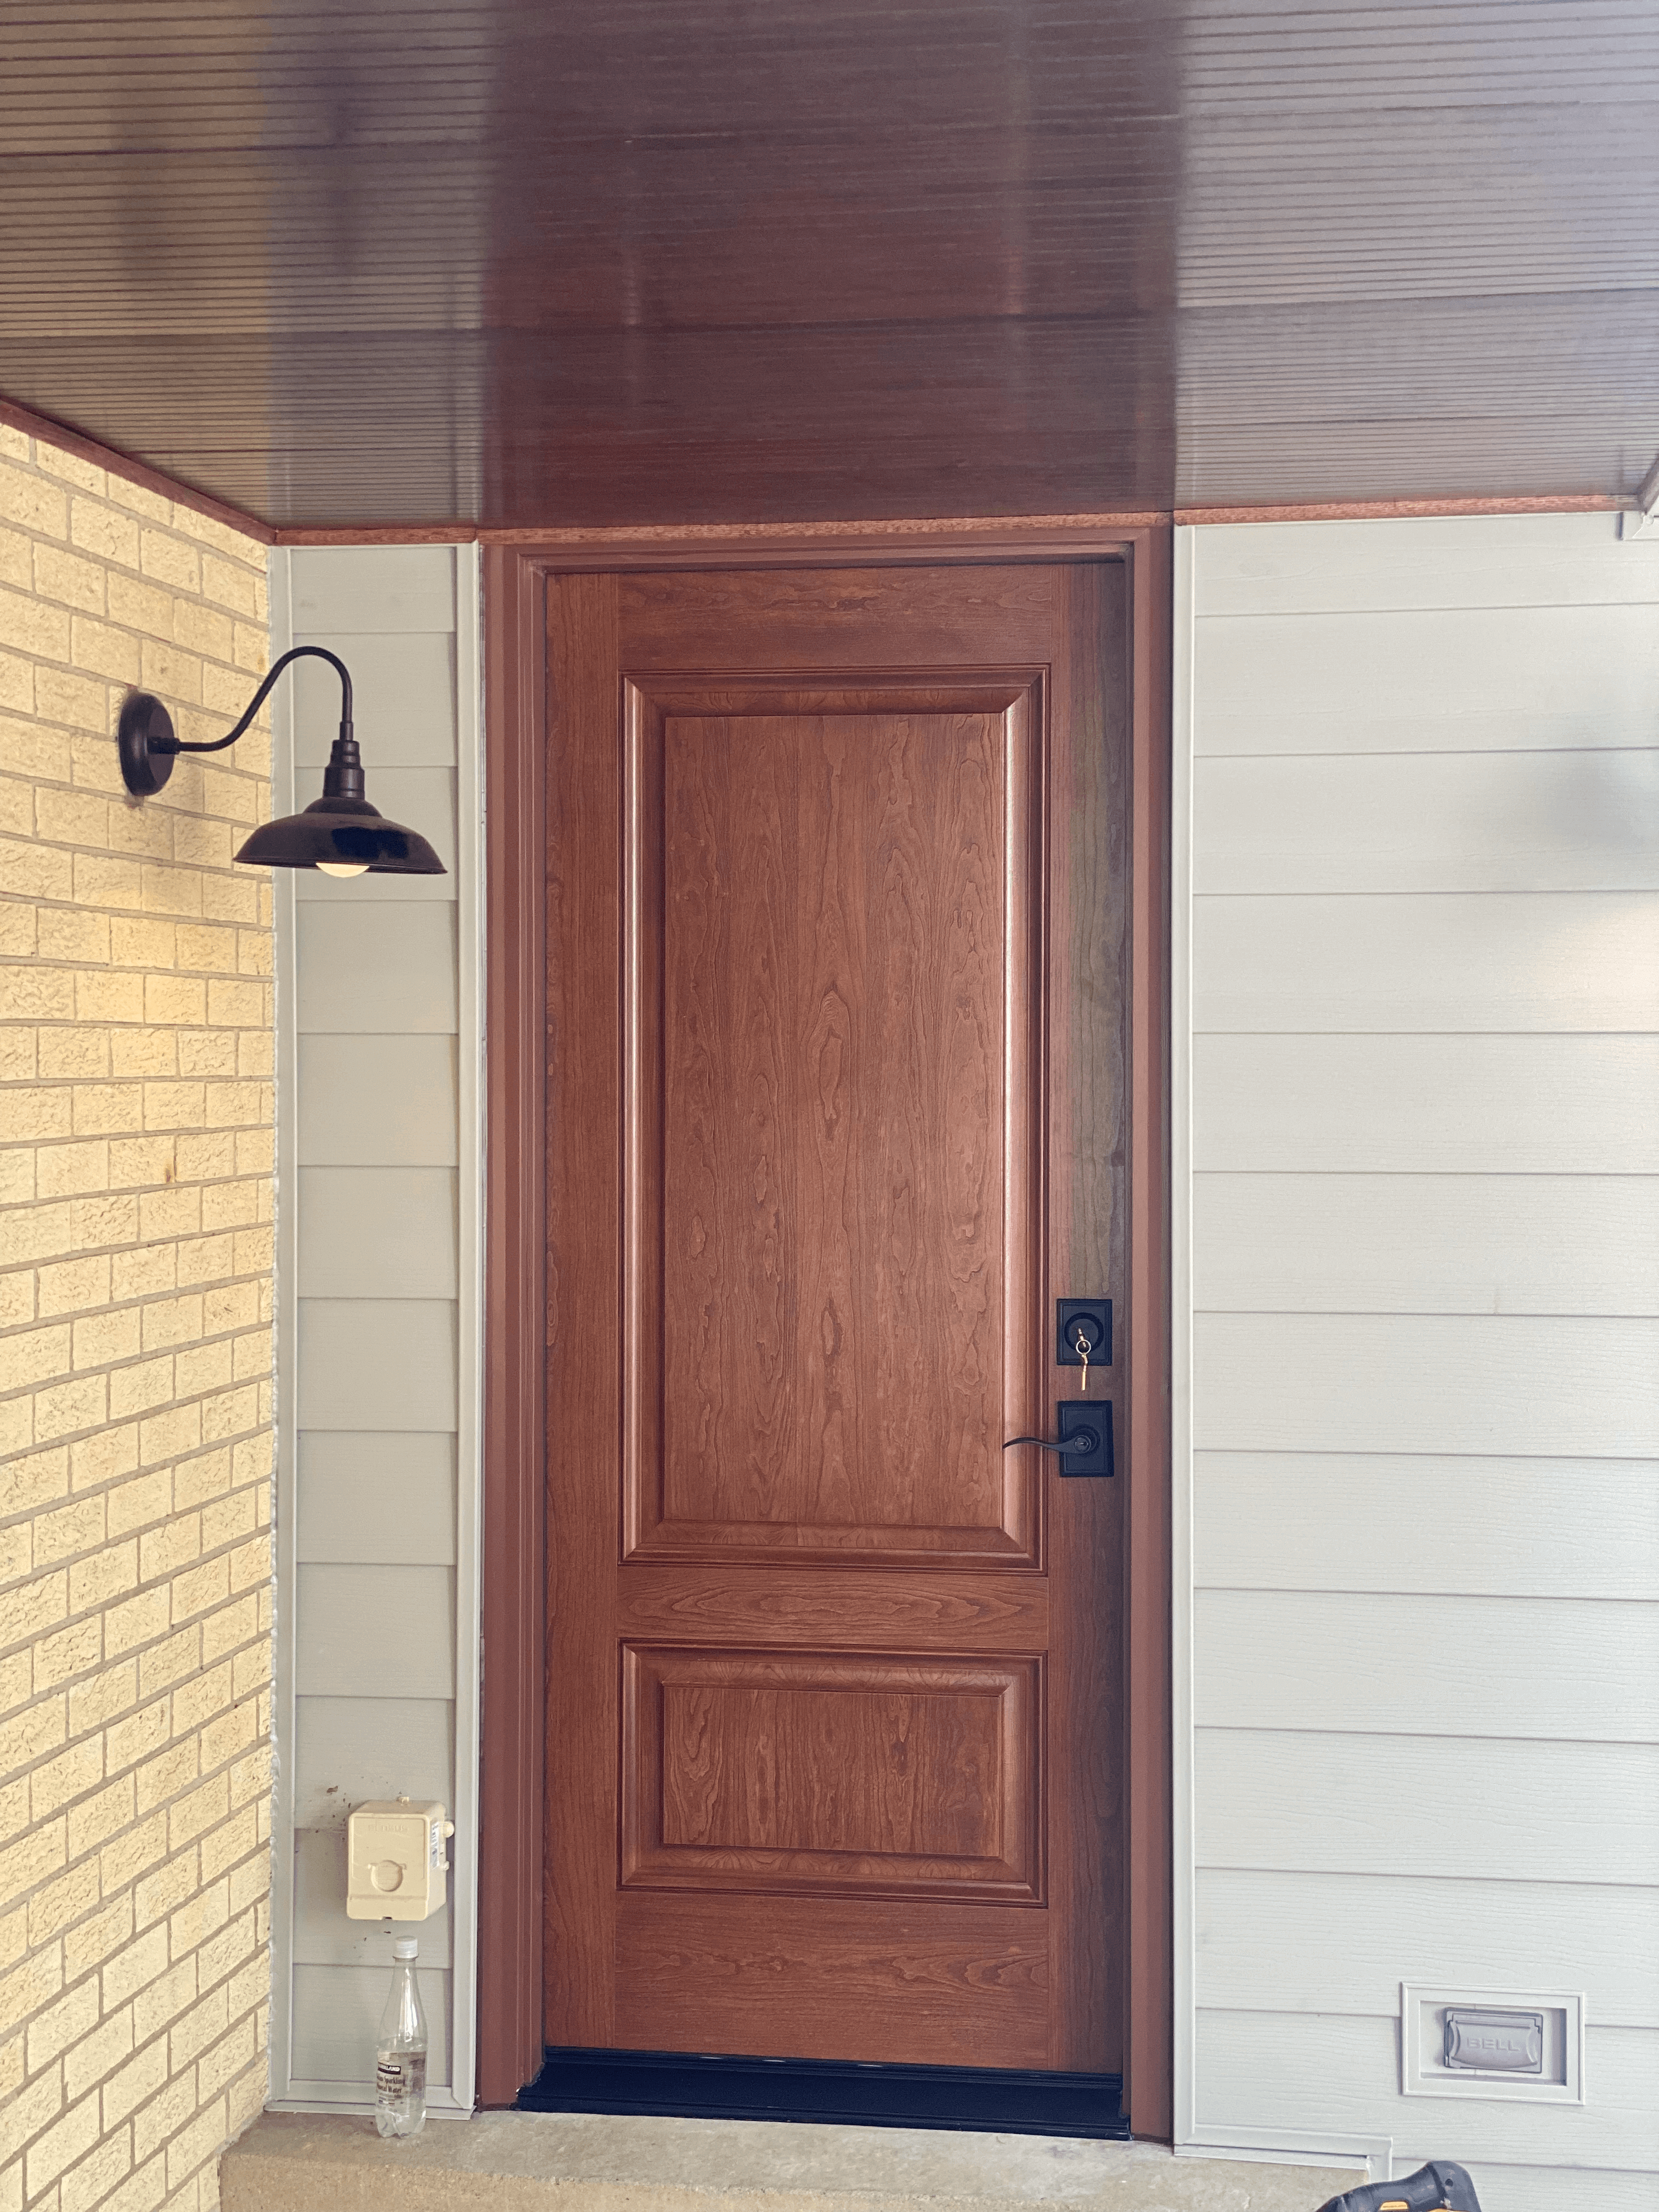 Provia Signet Fiberglass Entry Door - Naperville IL (2)